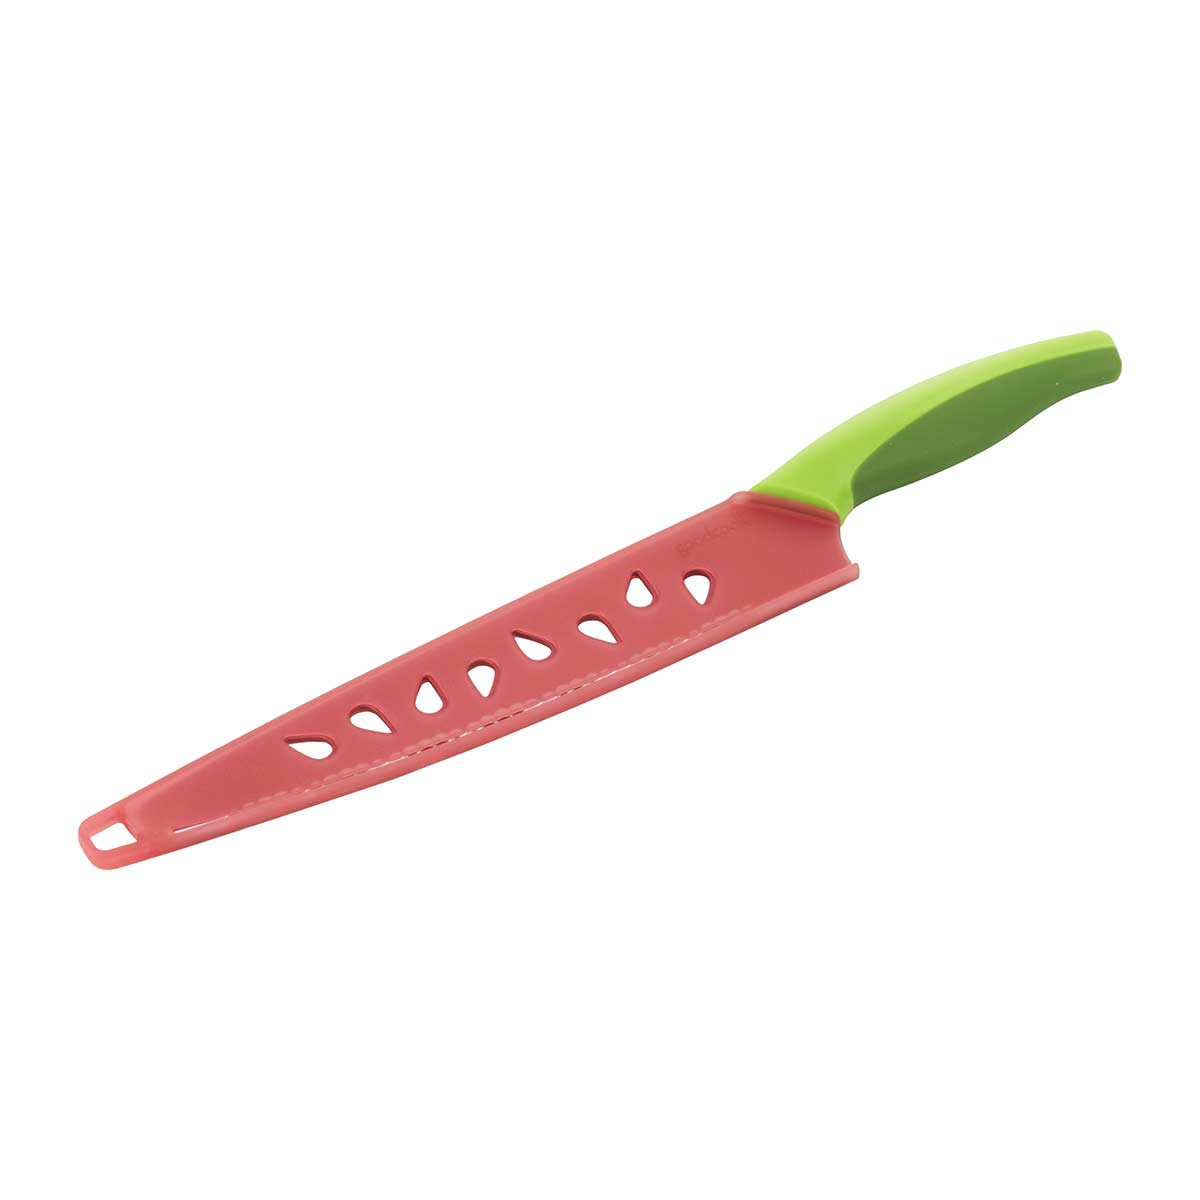 https://www.goodcook.com/media/catalog/product/g/o/goodcook-everyday-melon-knife-003.jpg?auto=webp&format=pjpg